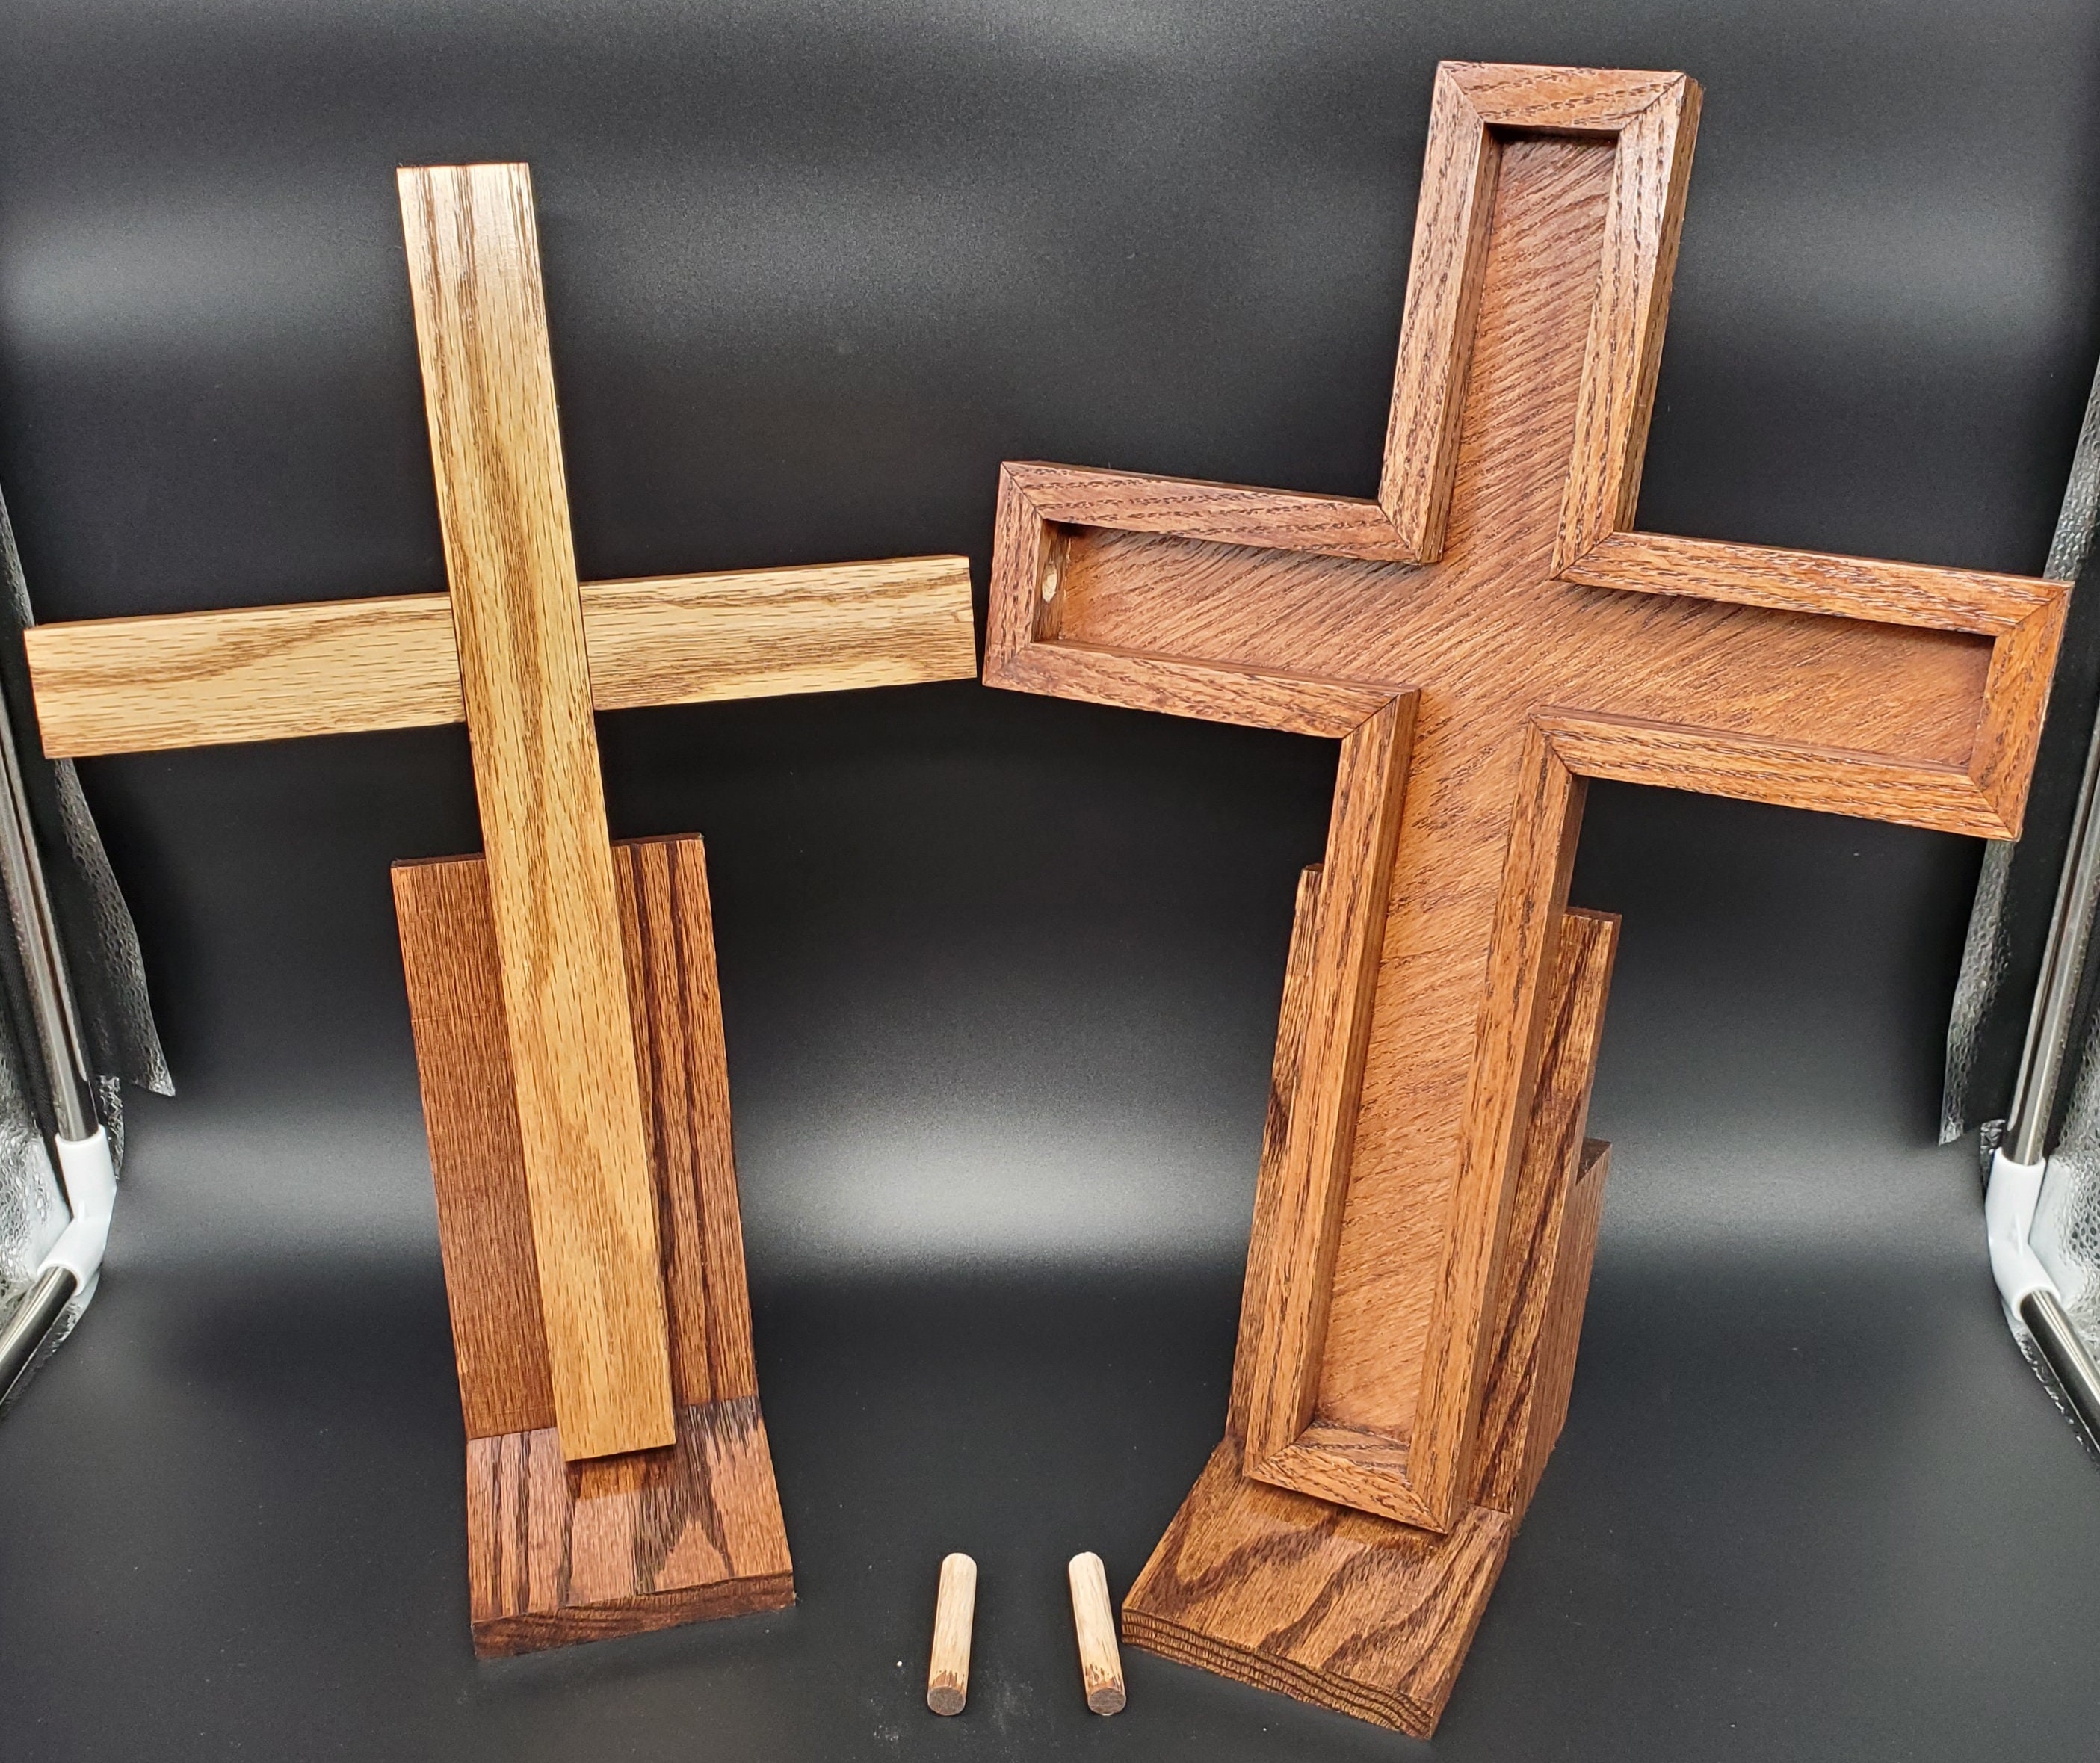 Handcrafted Custom Wood Sculpture — Terroir Wood Studio